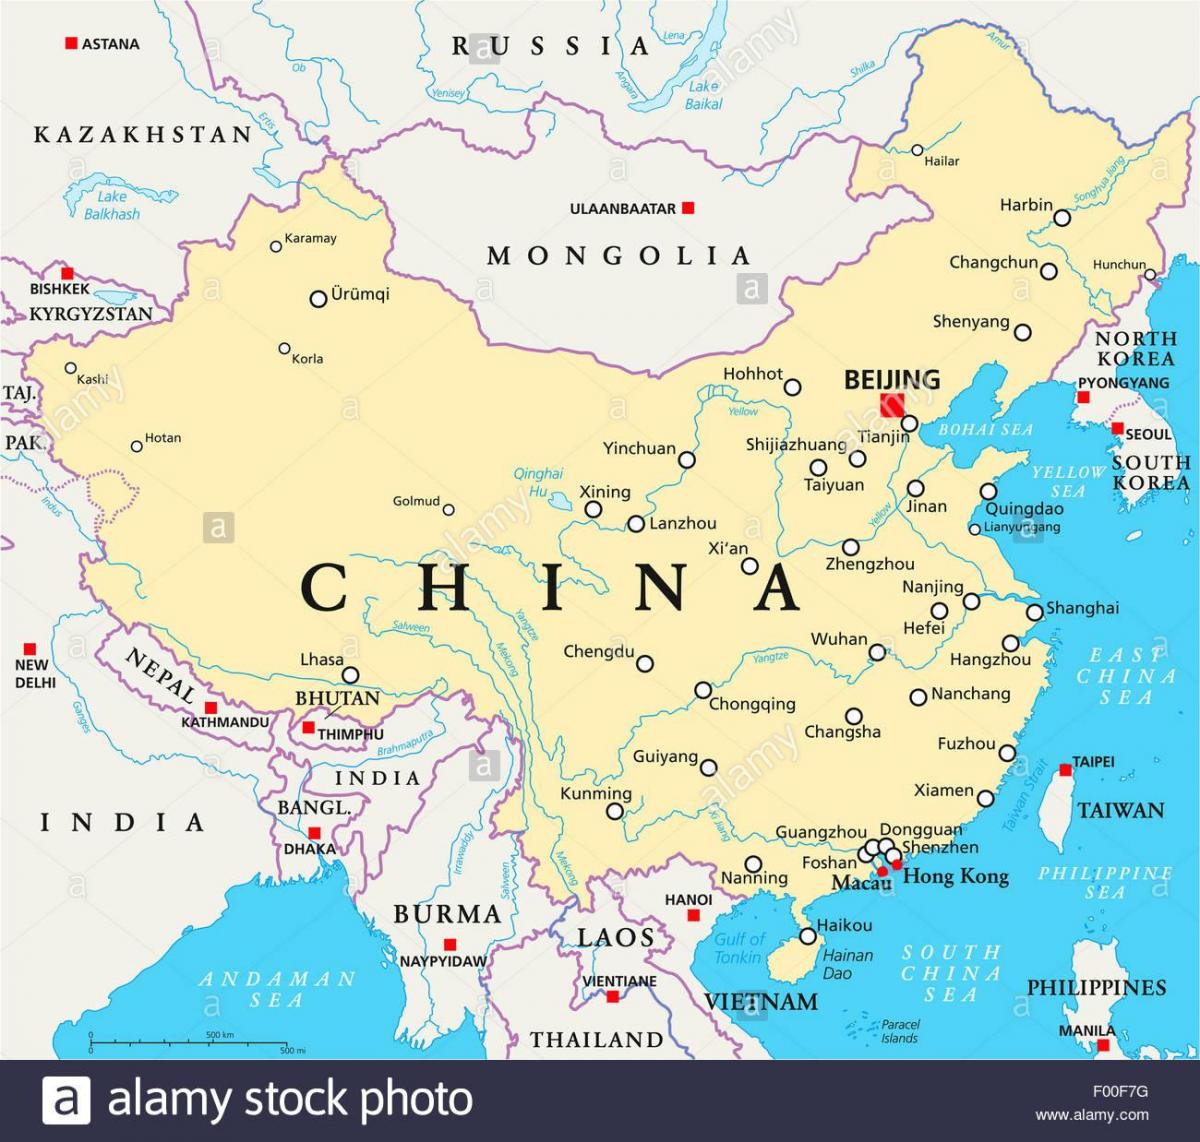 China capital city map